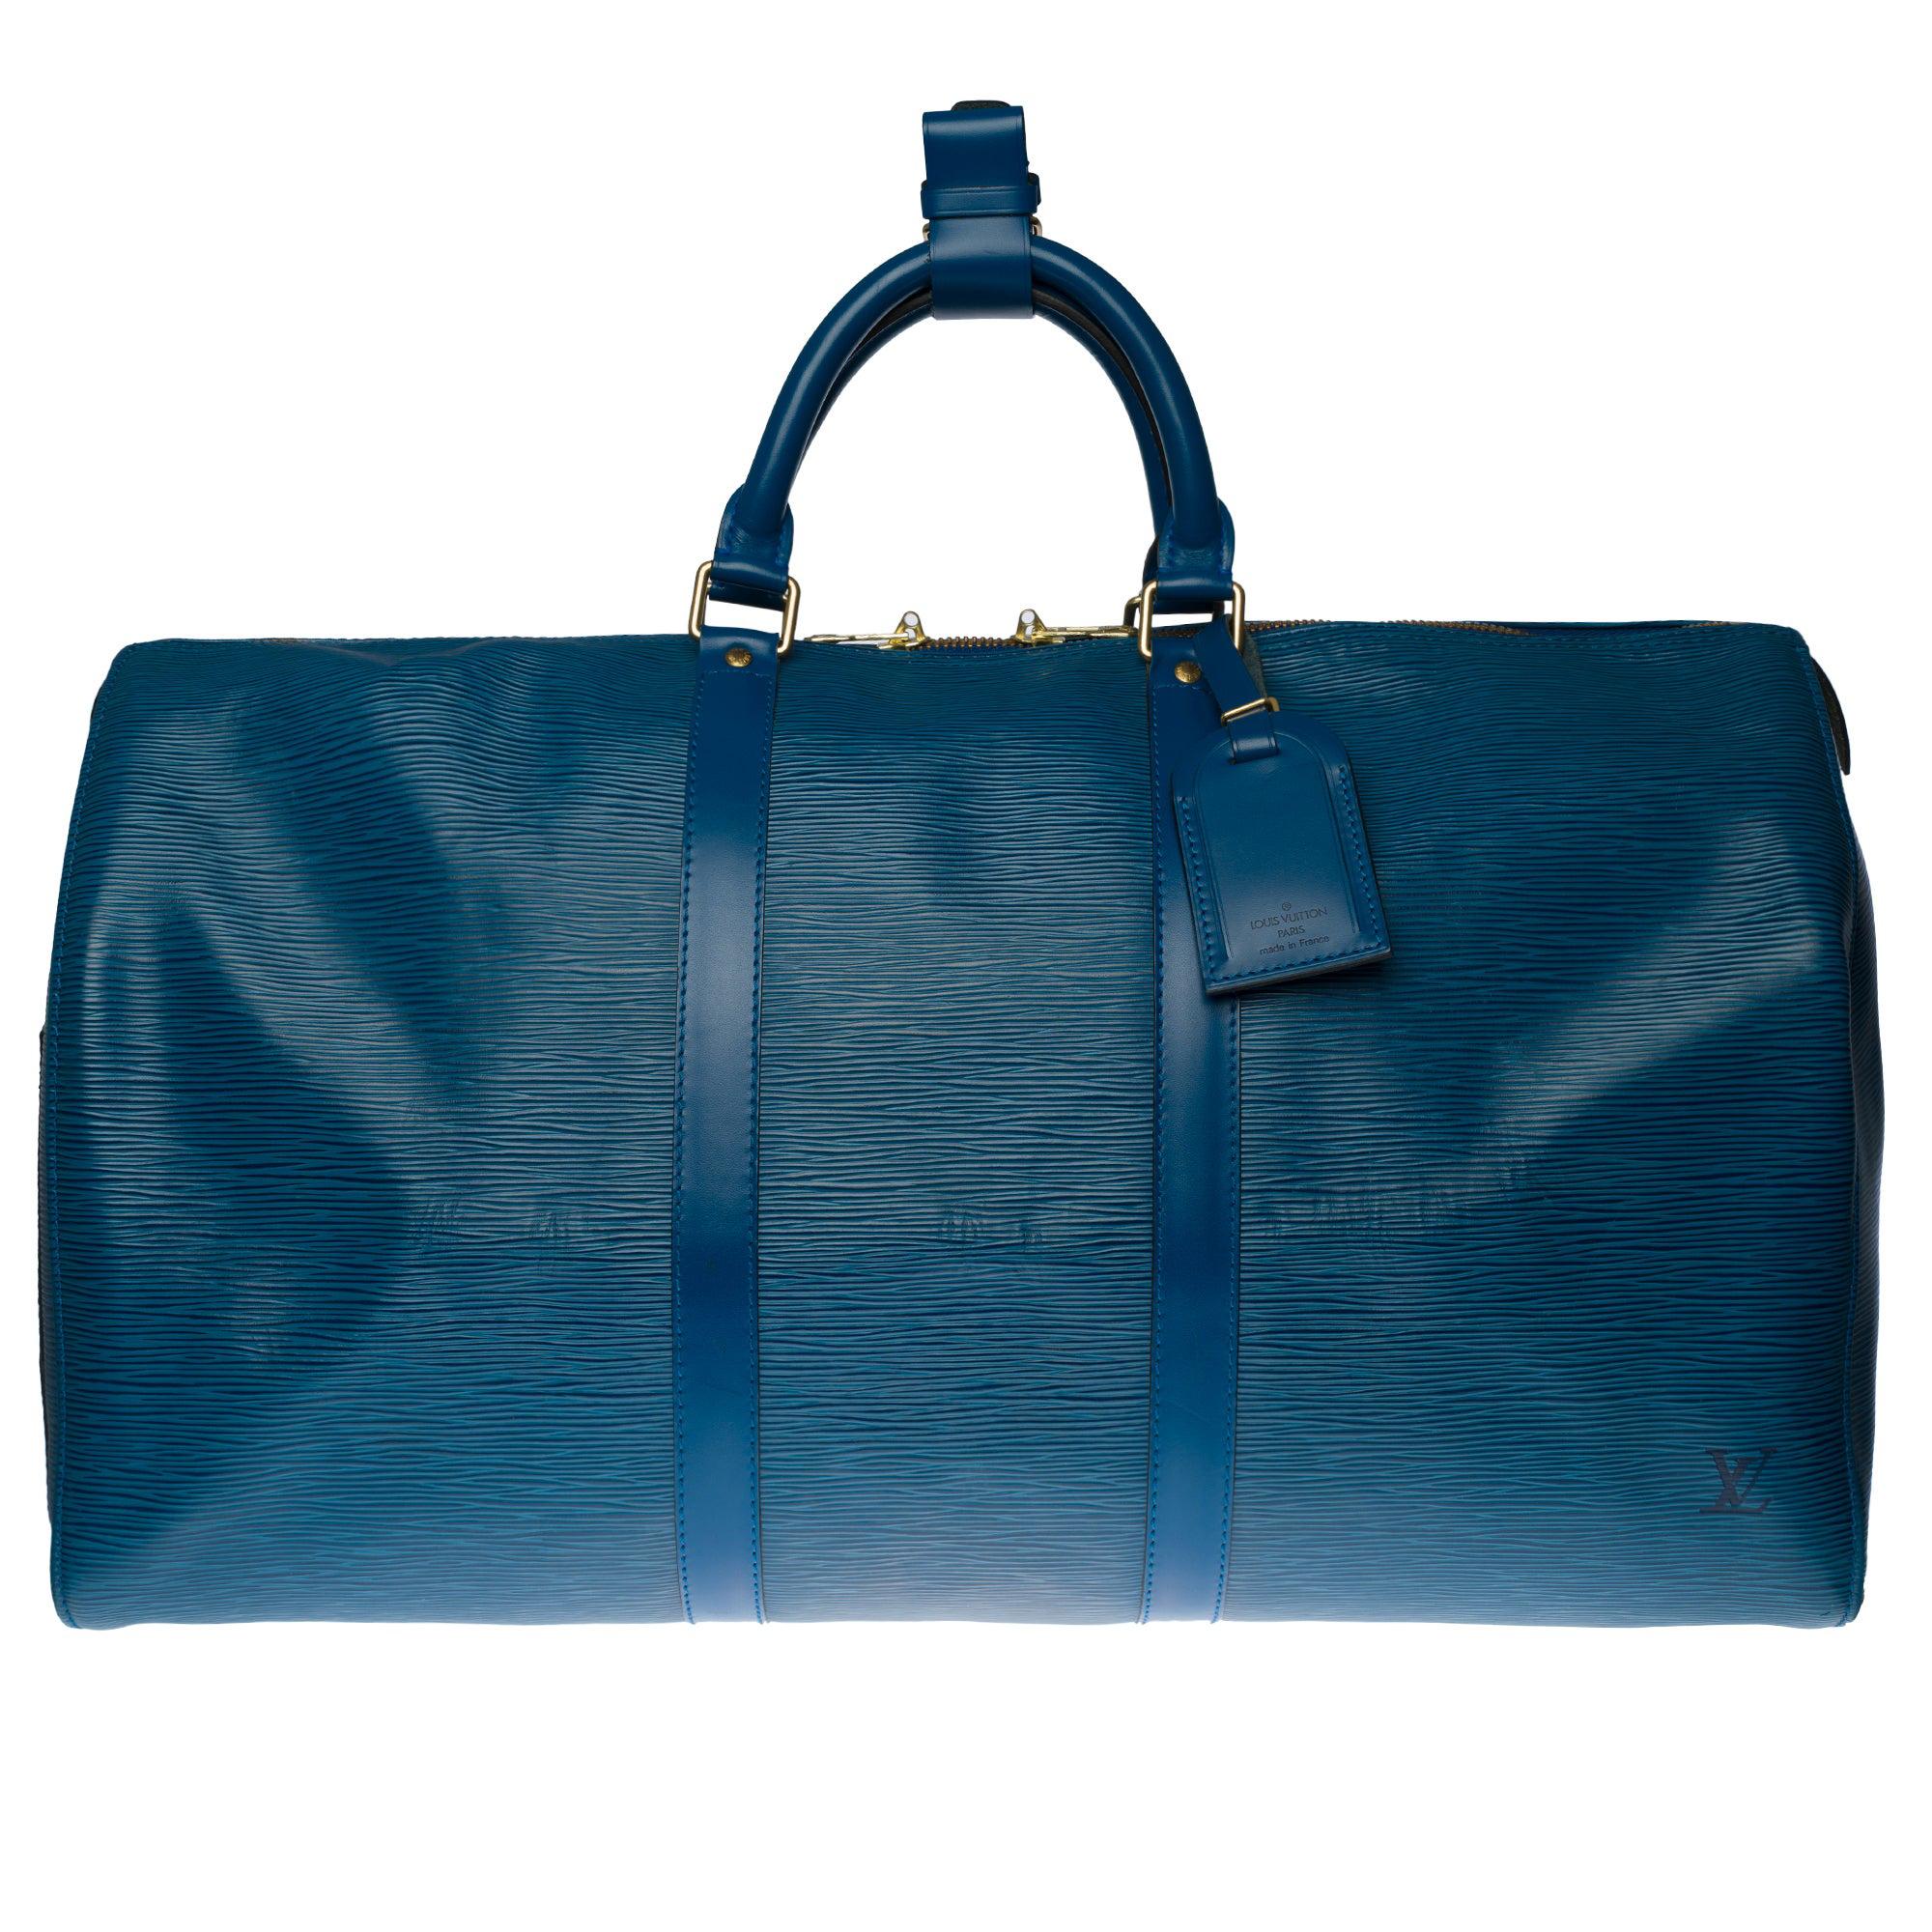 Louis Vuitton Keepall 50 Travel bag in blue épi leather